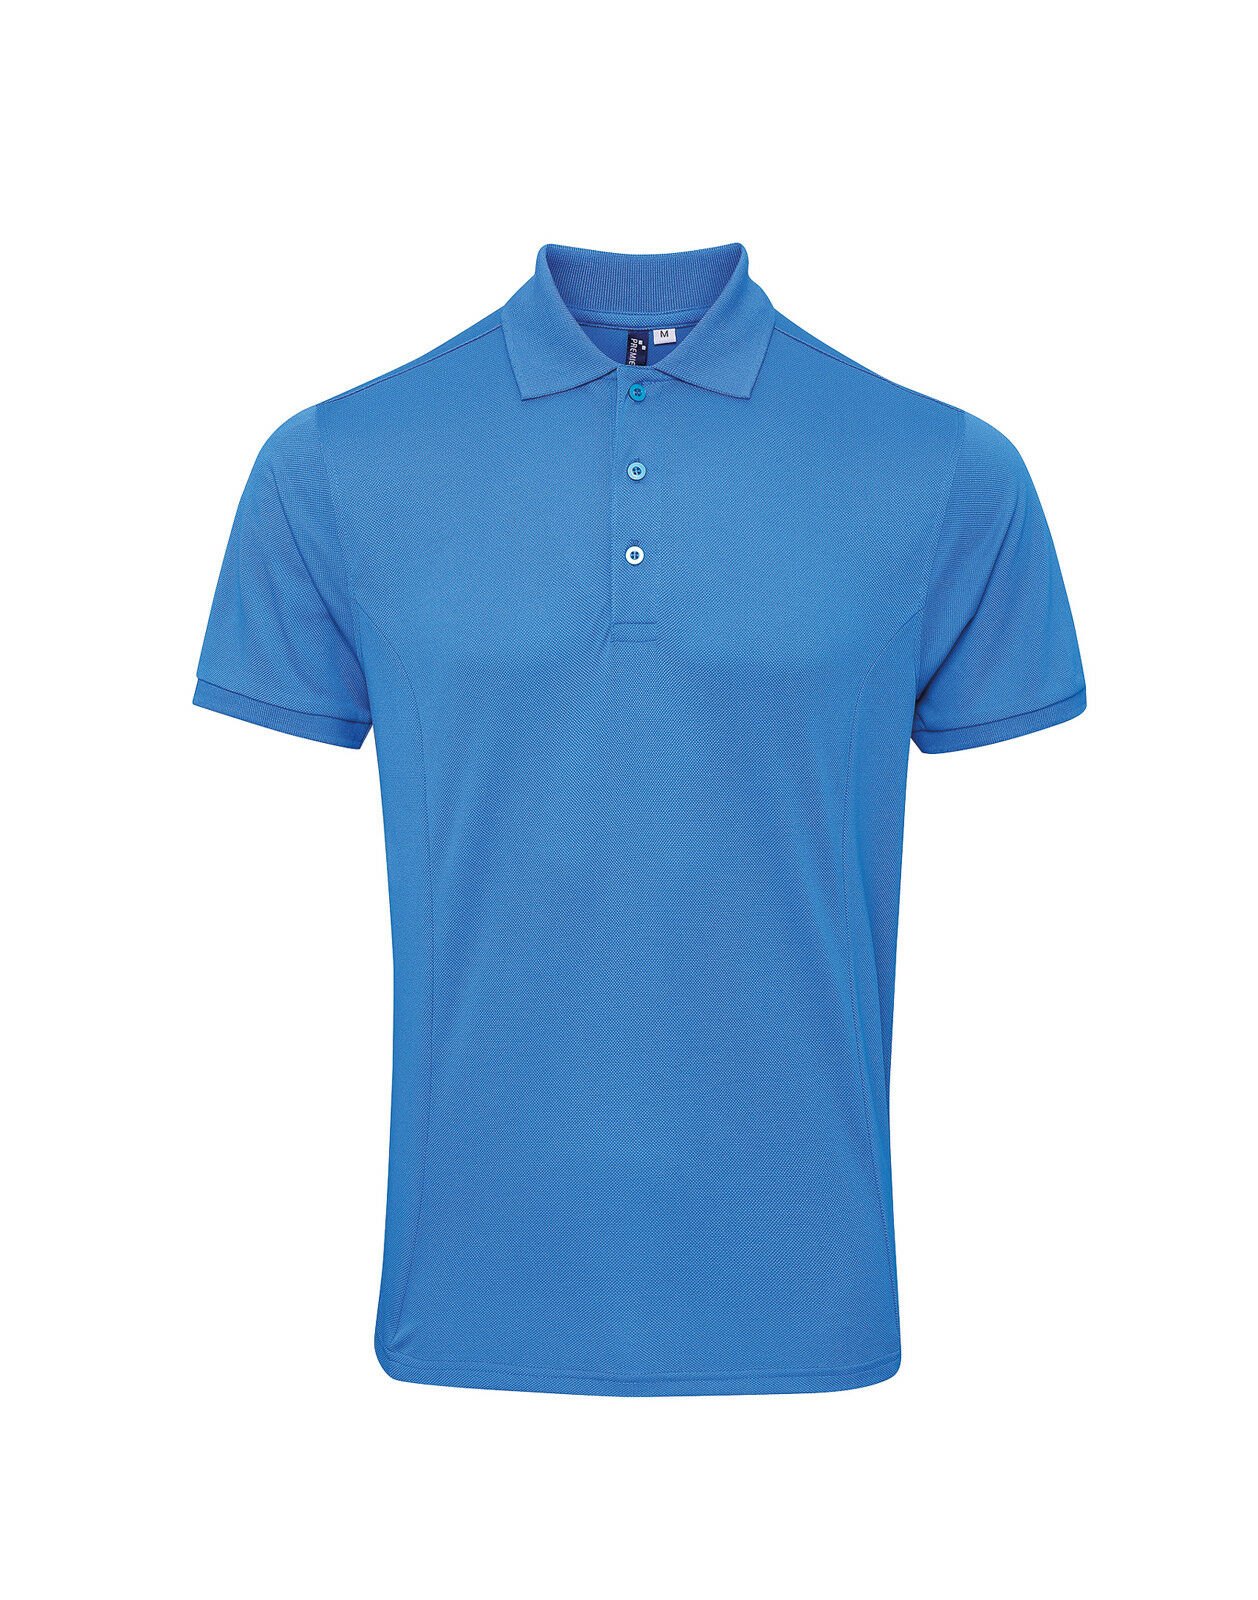 PR630 Cool Checker Breathable Polo Shirt - Simply Hi Vis Clothing UK